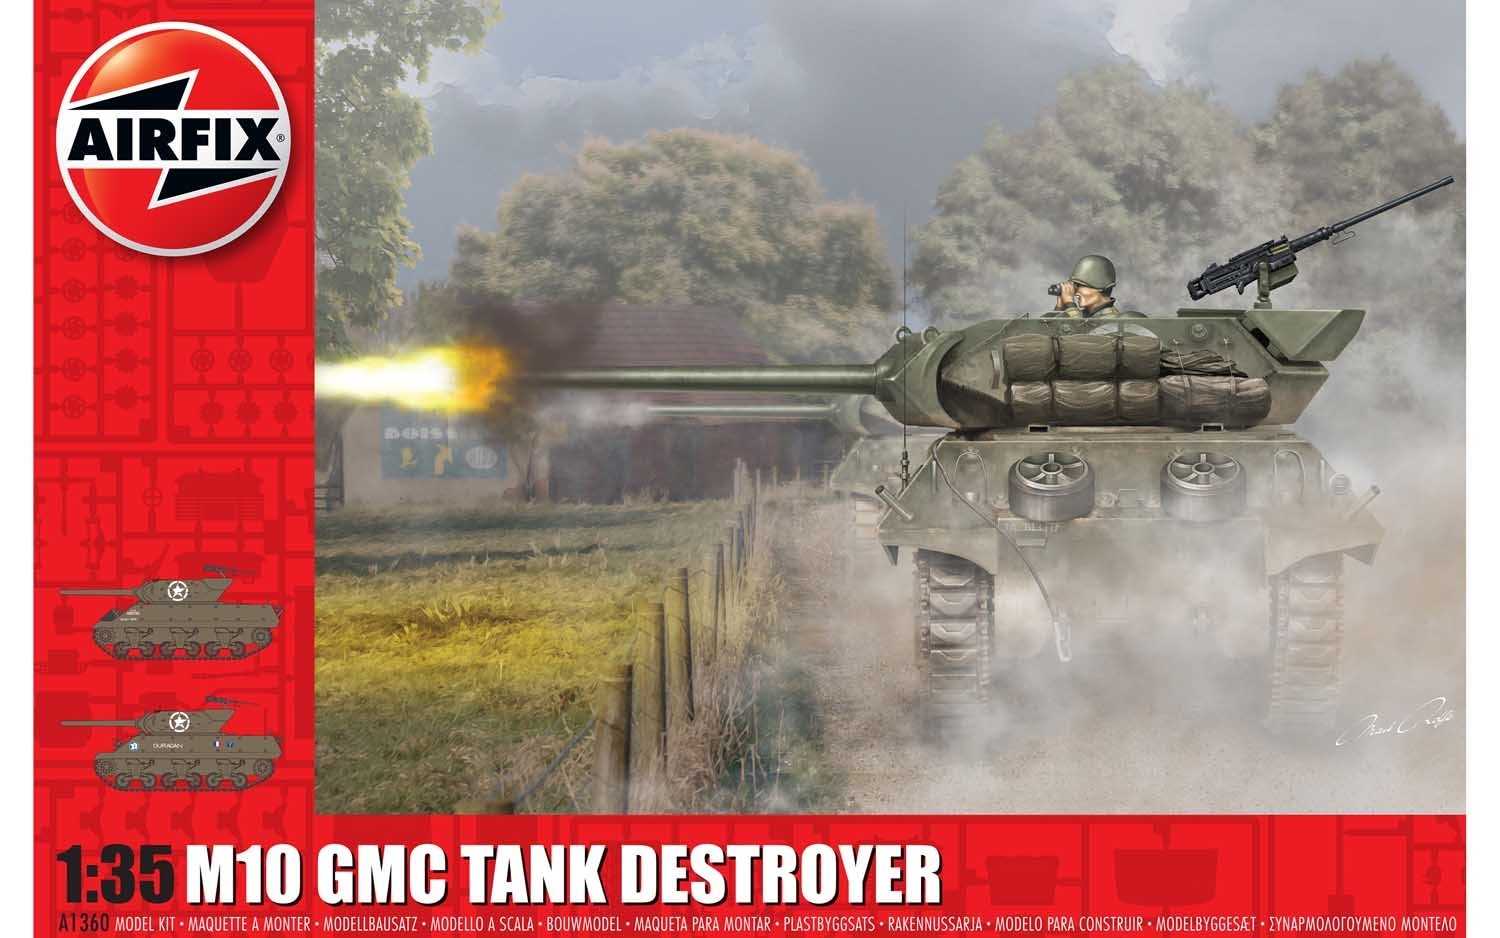 Airfix Classic Kit tank A1360 - M10 GMC (U.S. Army) (1:35)